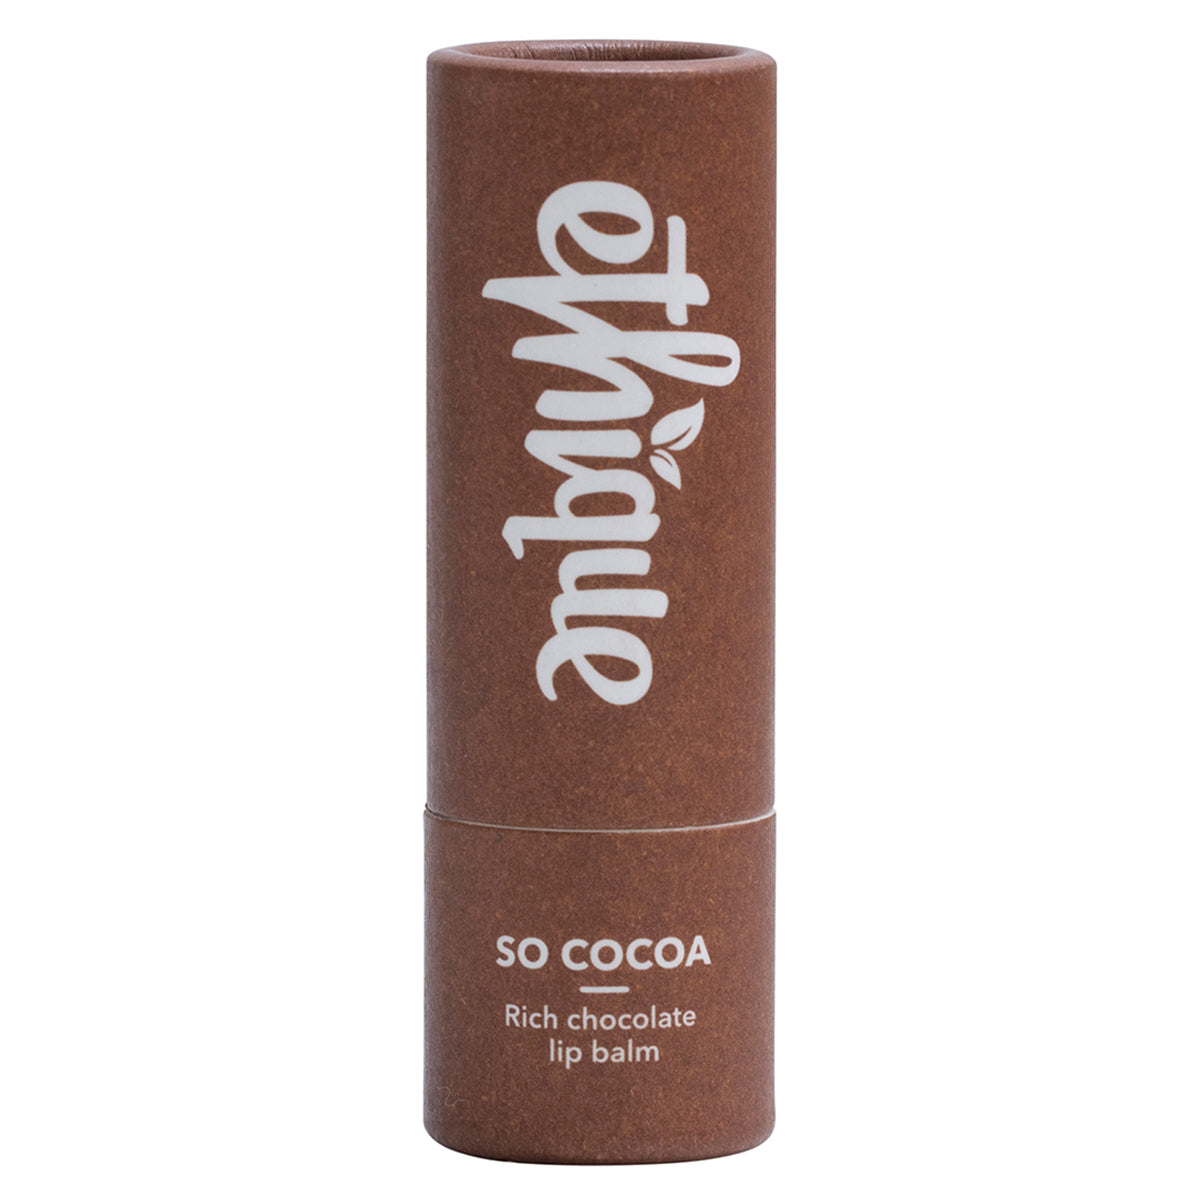 Ethique So Cocoa Rich Chocolate Lip Balm 7g